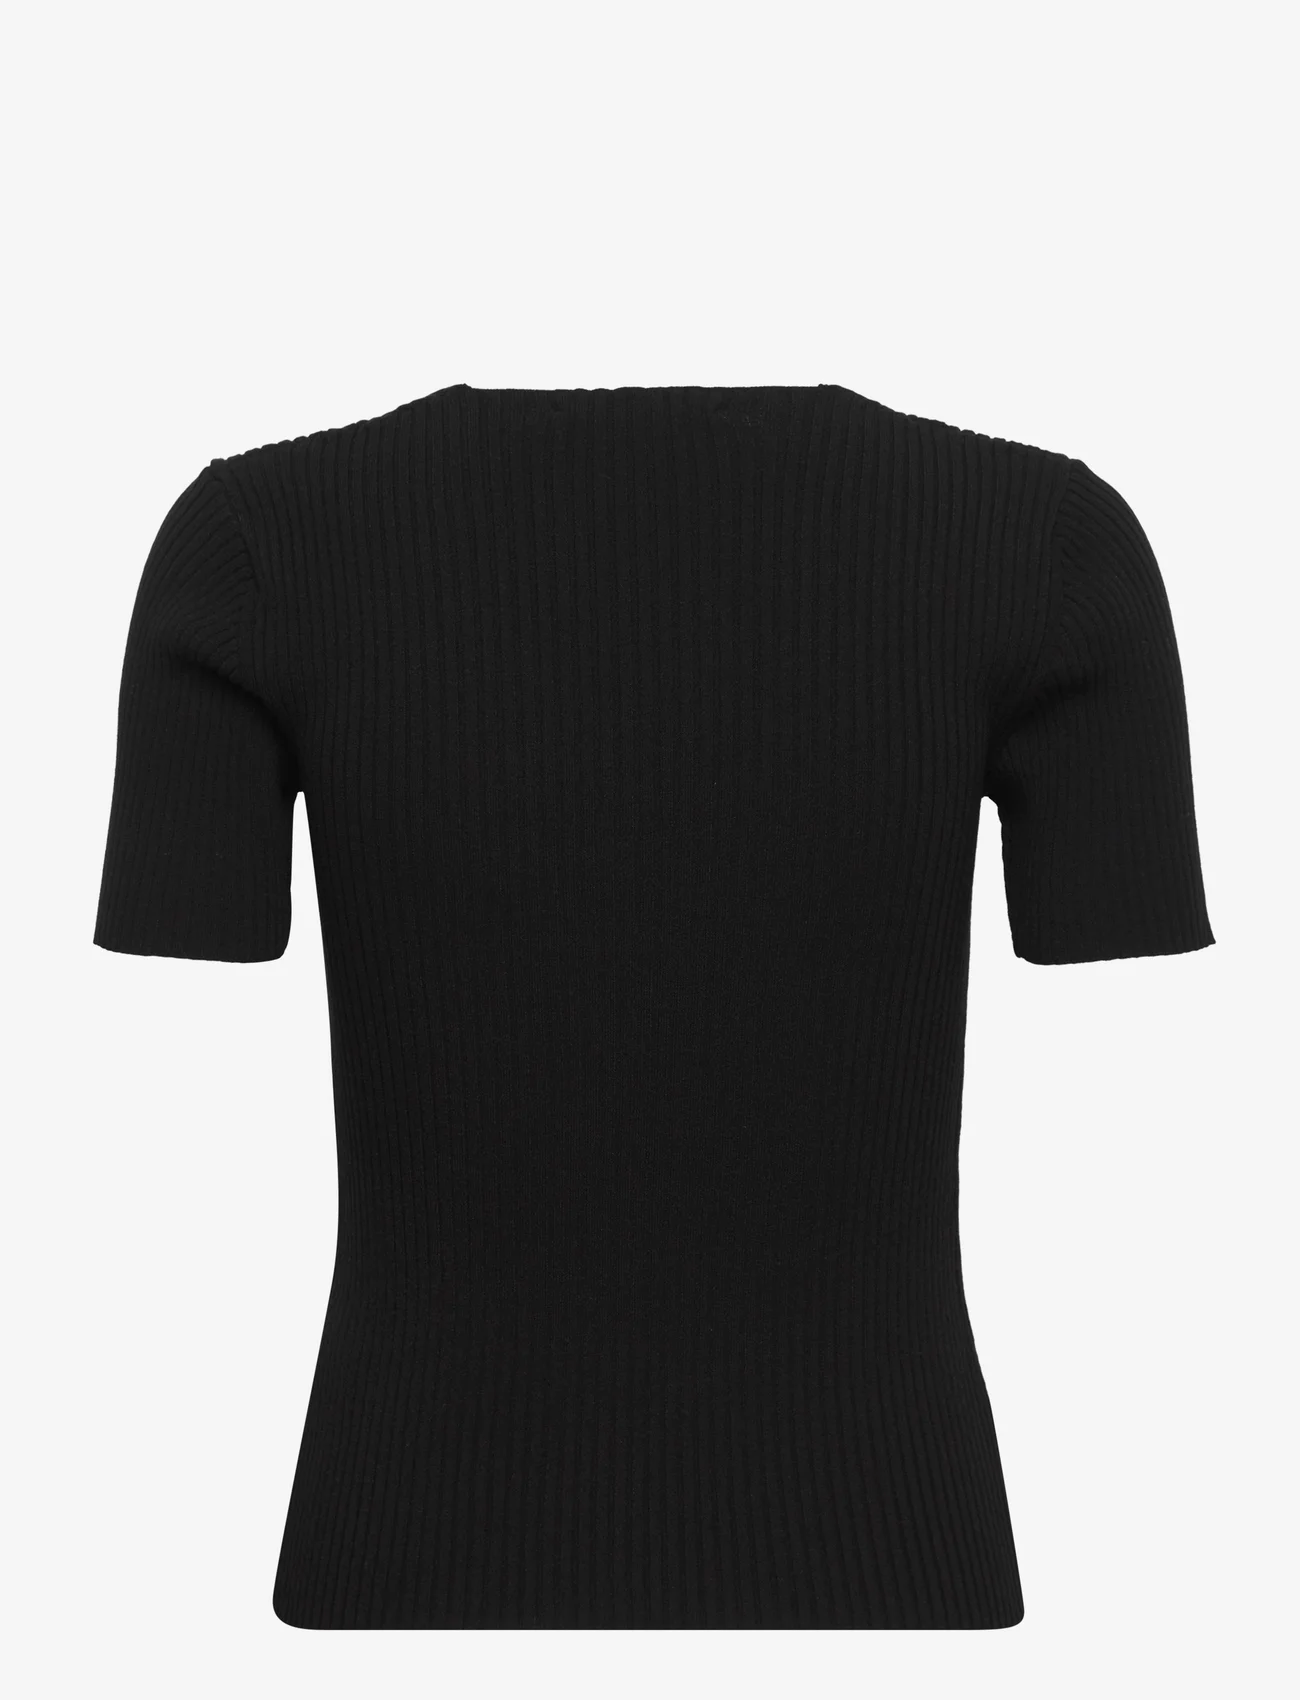 Rabens Saloner - Fabia - Contour knit short slv. top - t-shirts & tops - black - 1